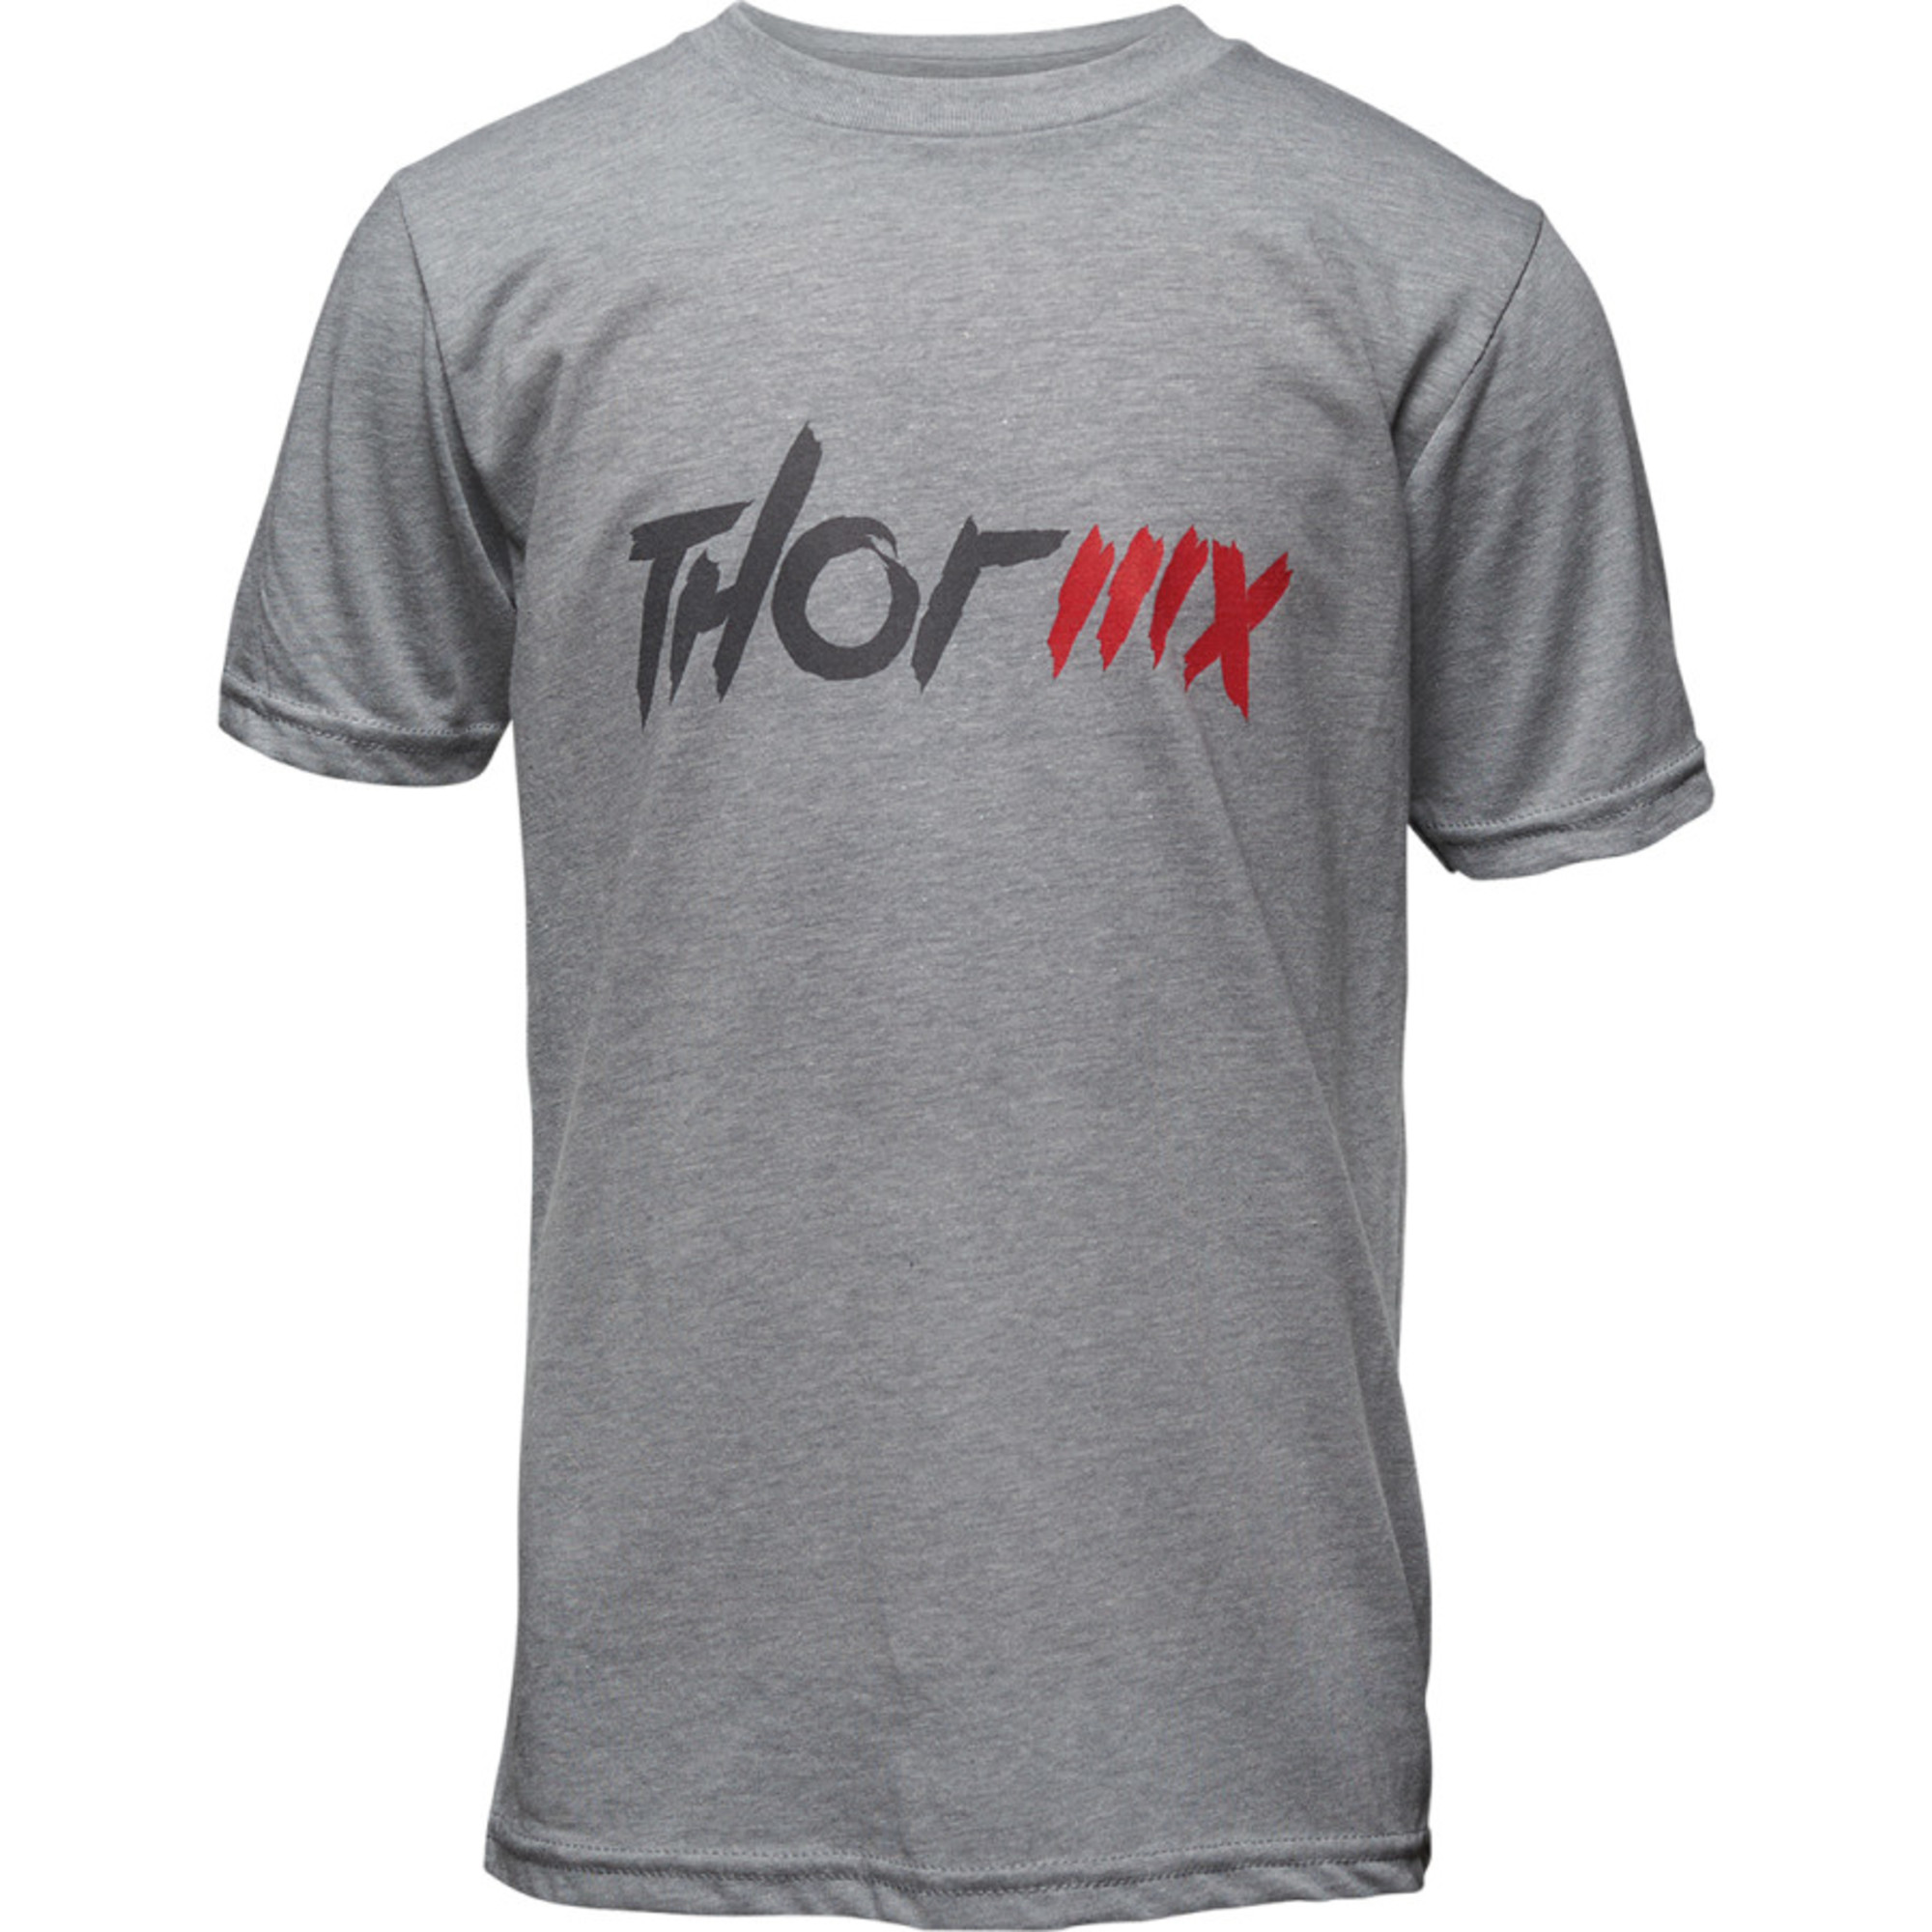 thor t-shirt shirts for kids mx tee